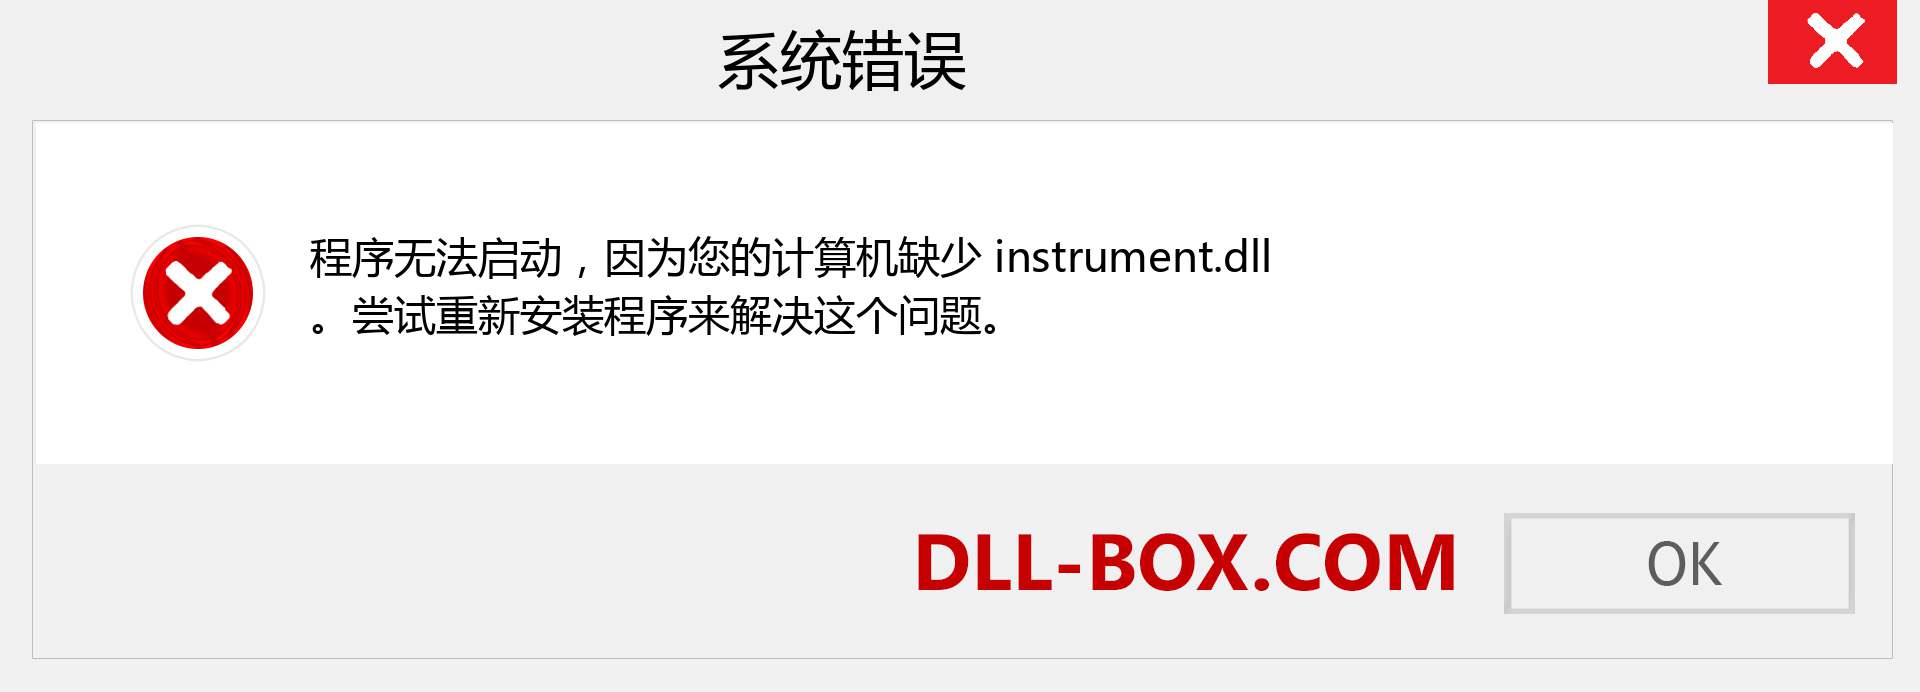 instrument.dll 文件丢失？。 适用于 Windows 7、8、10 的下载 - 修复 Windows、照片、图像上的 instrument dll 丢失错误